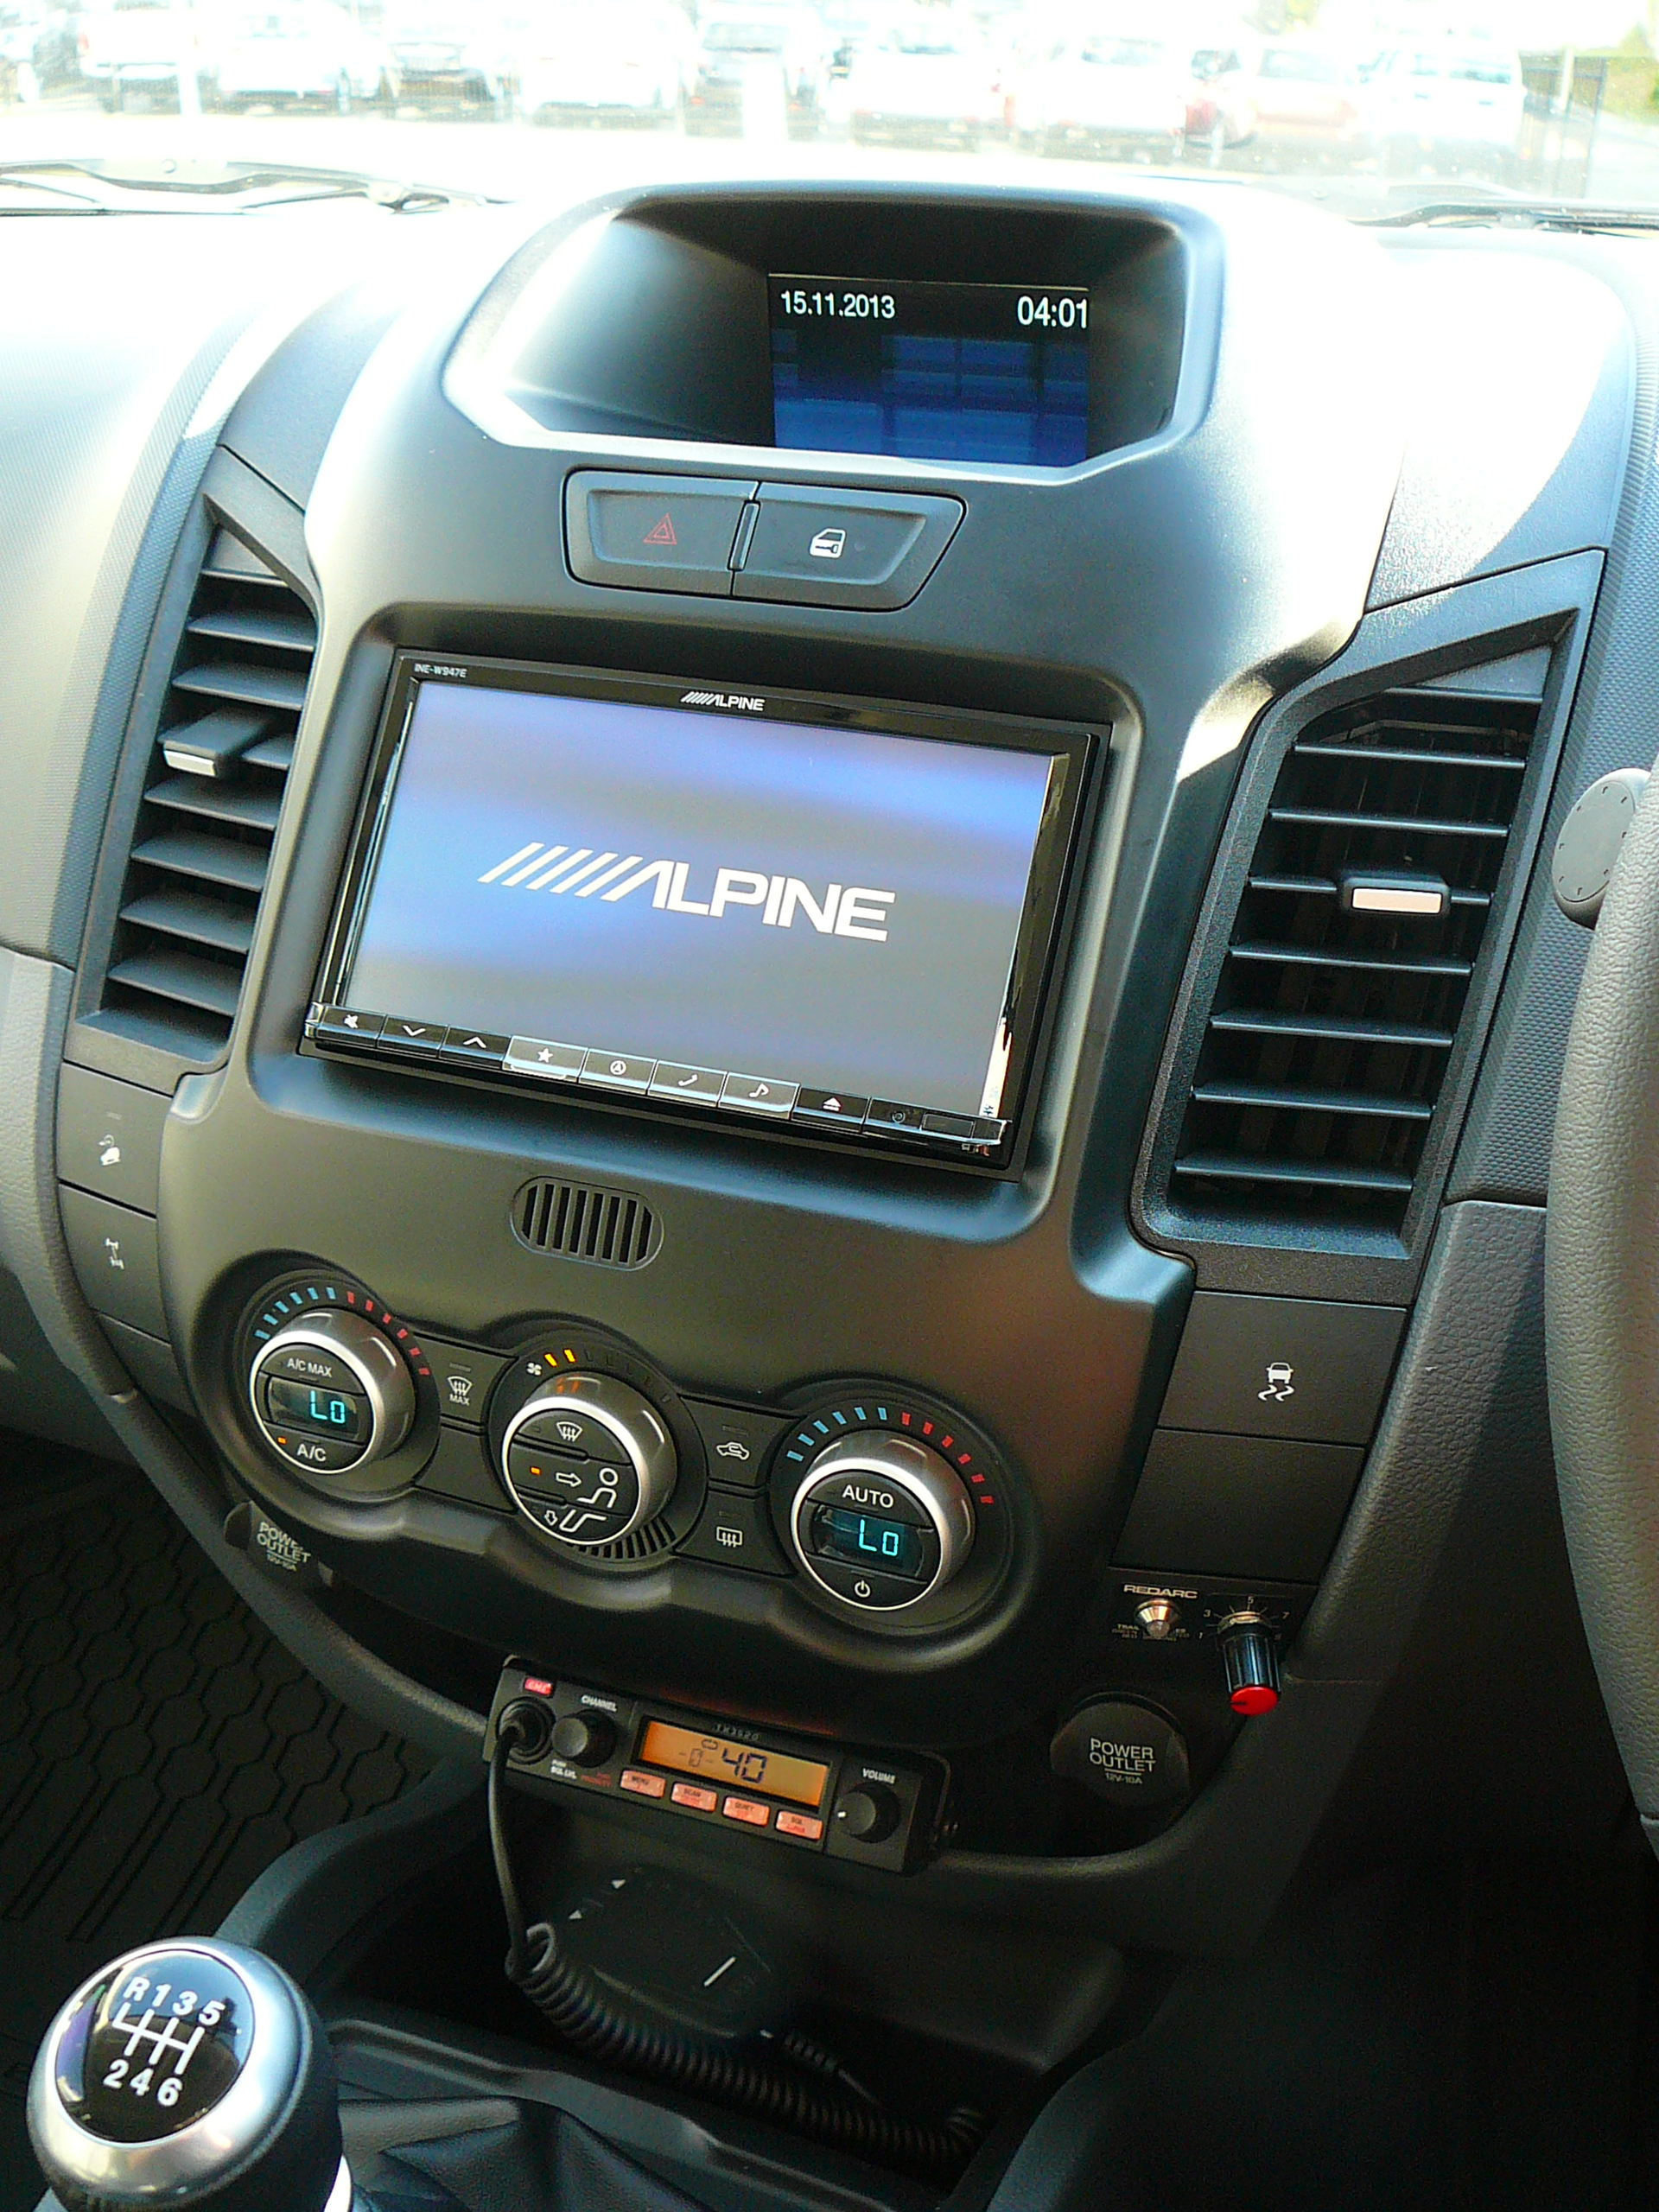 Ford Ranger 2013, Alpine INE-W947 AU with New Dash Trim and Interface.